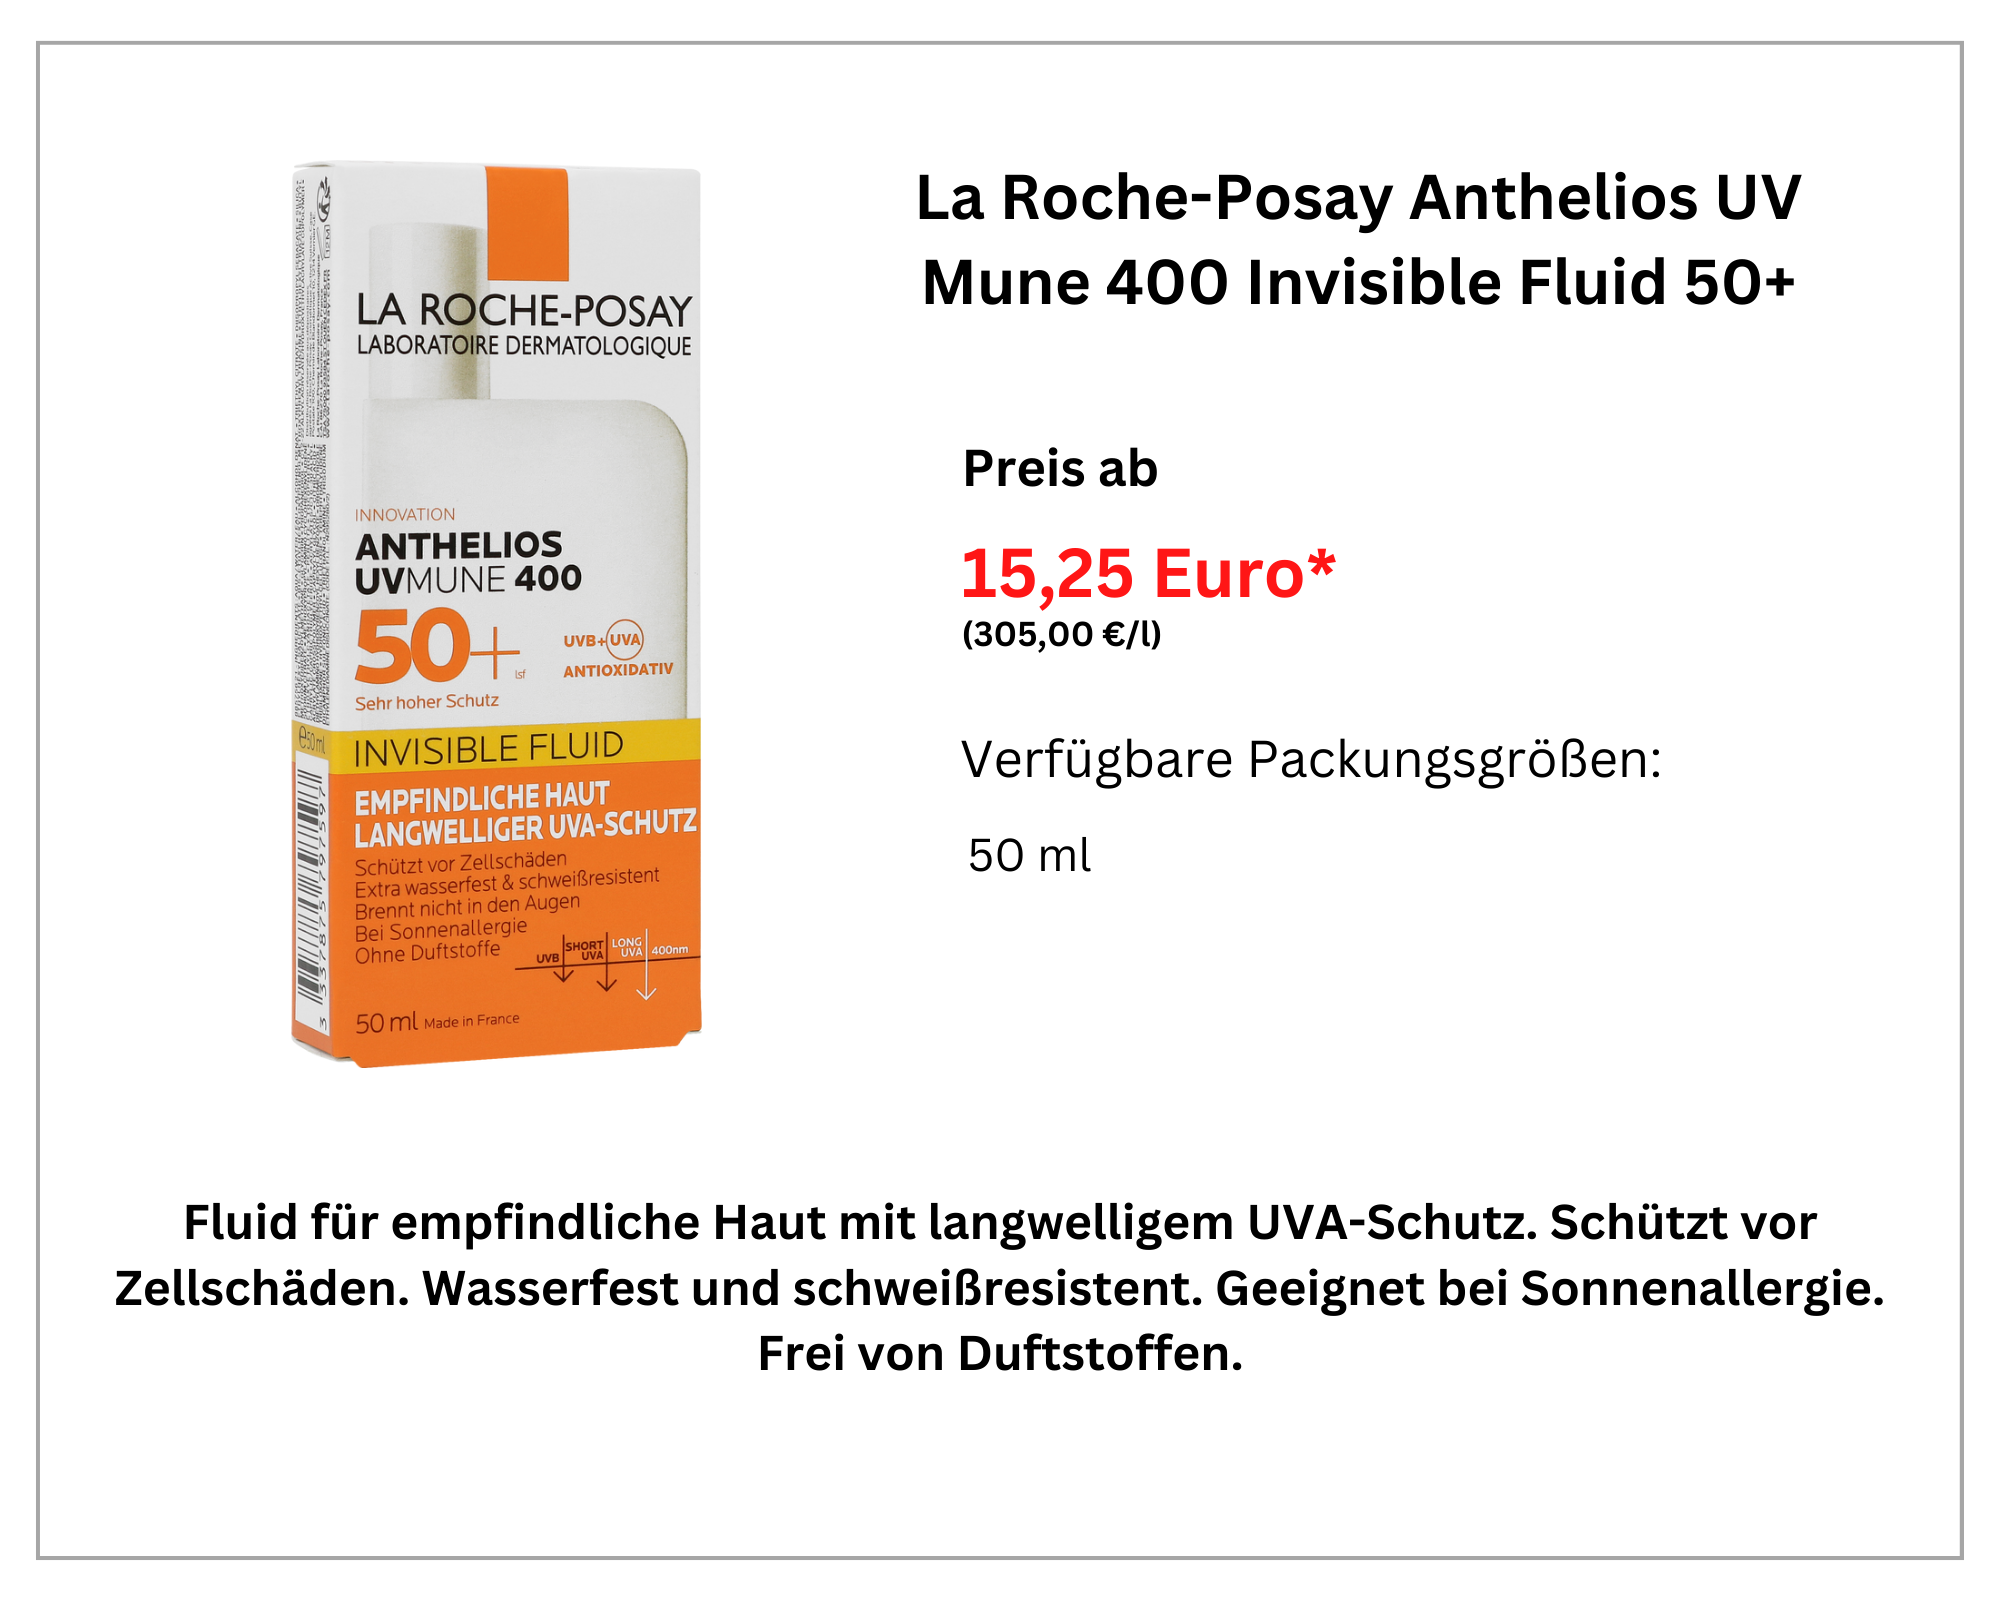  La Roche-Posay Anthelios Invisible Fluid UVMune 400 width=